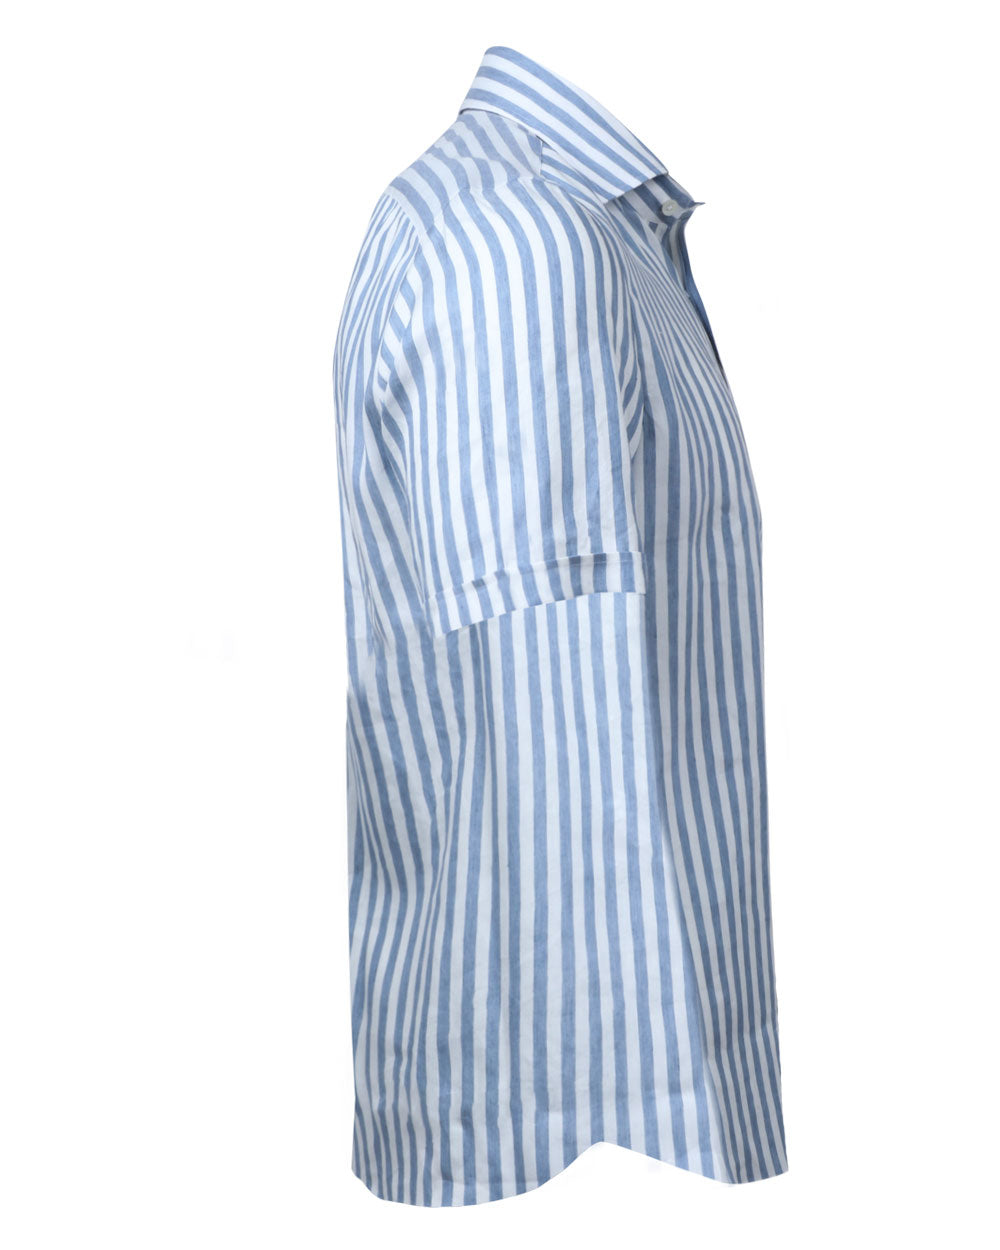 Blue and White Striped Dress Shirt